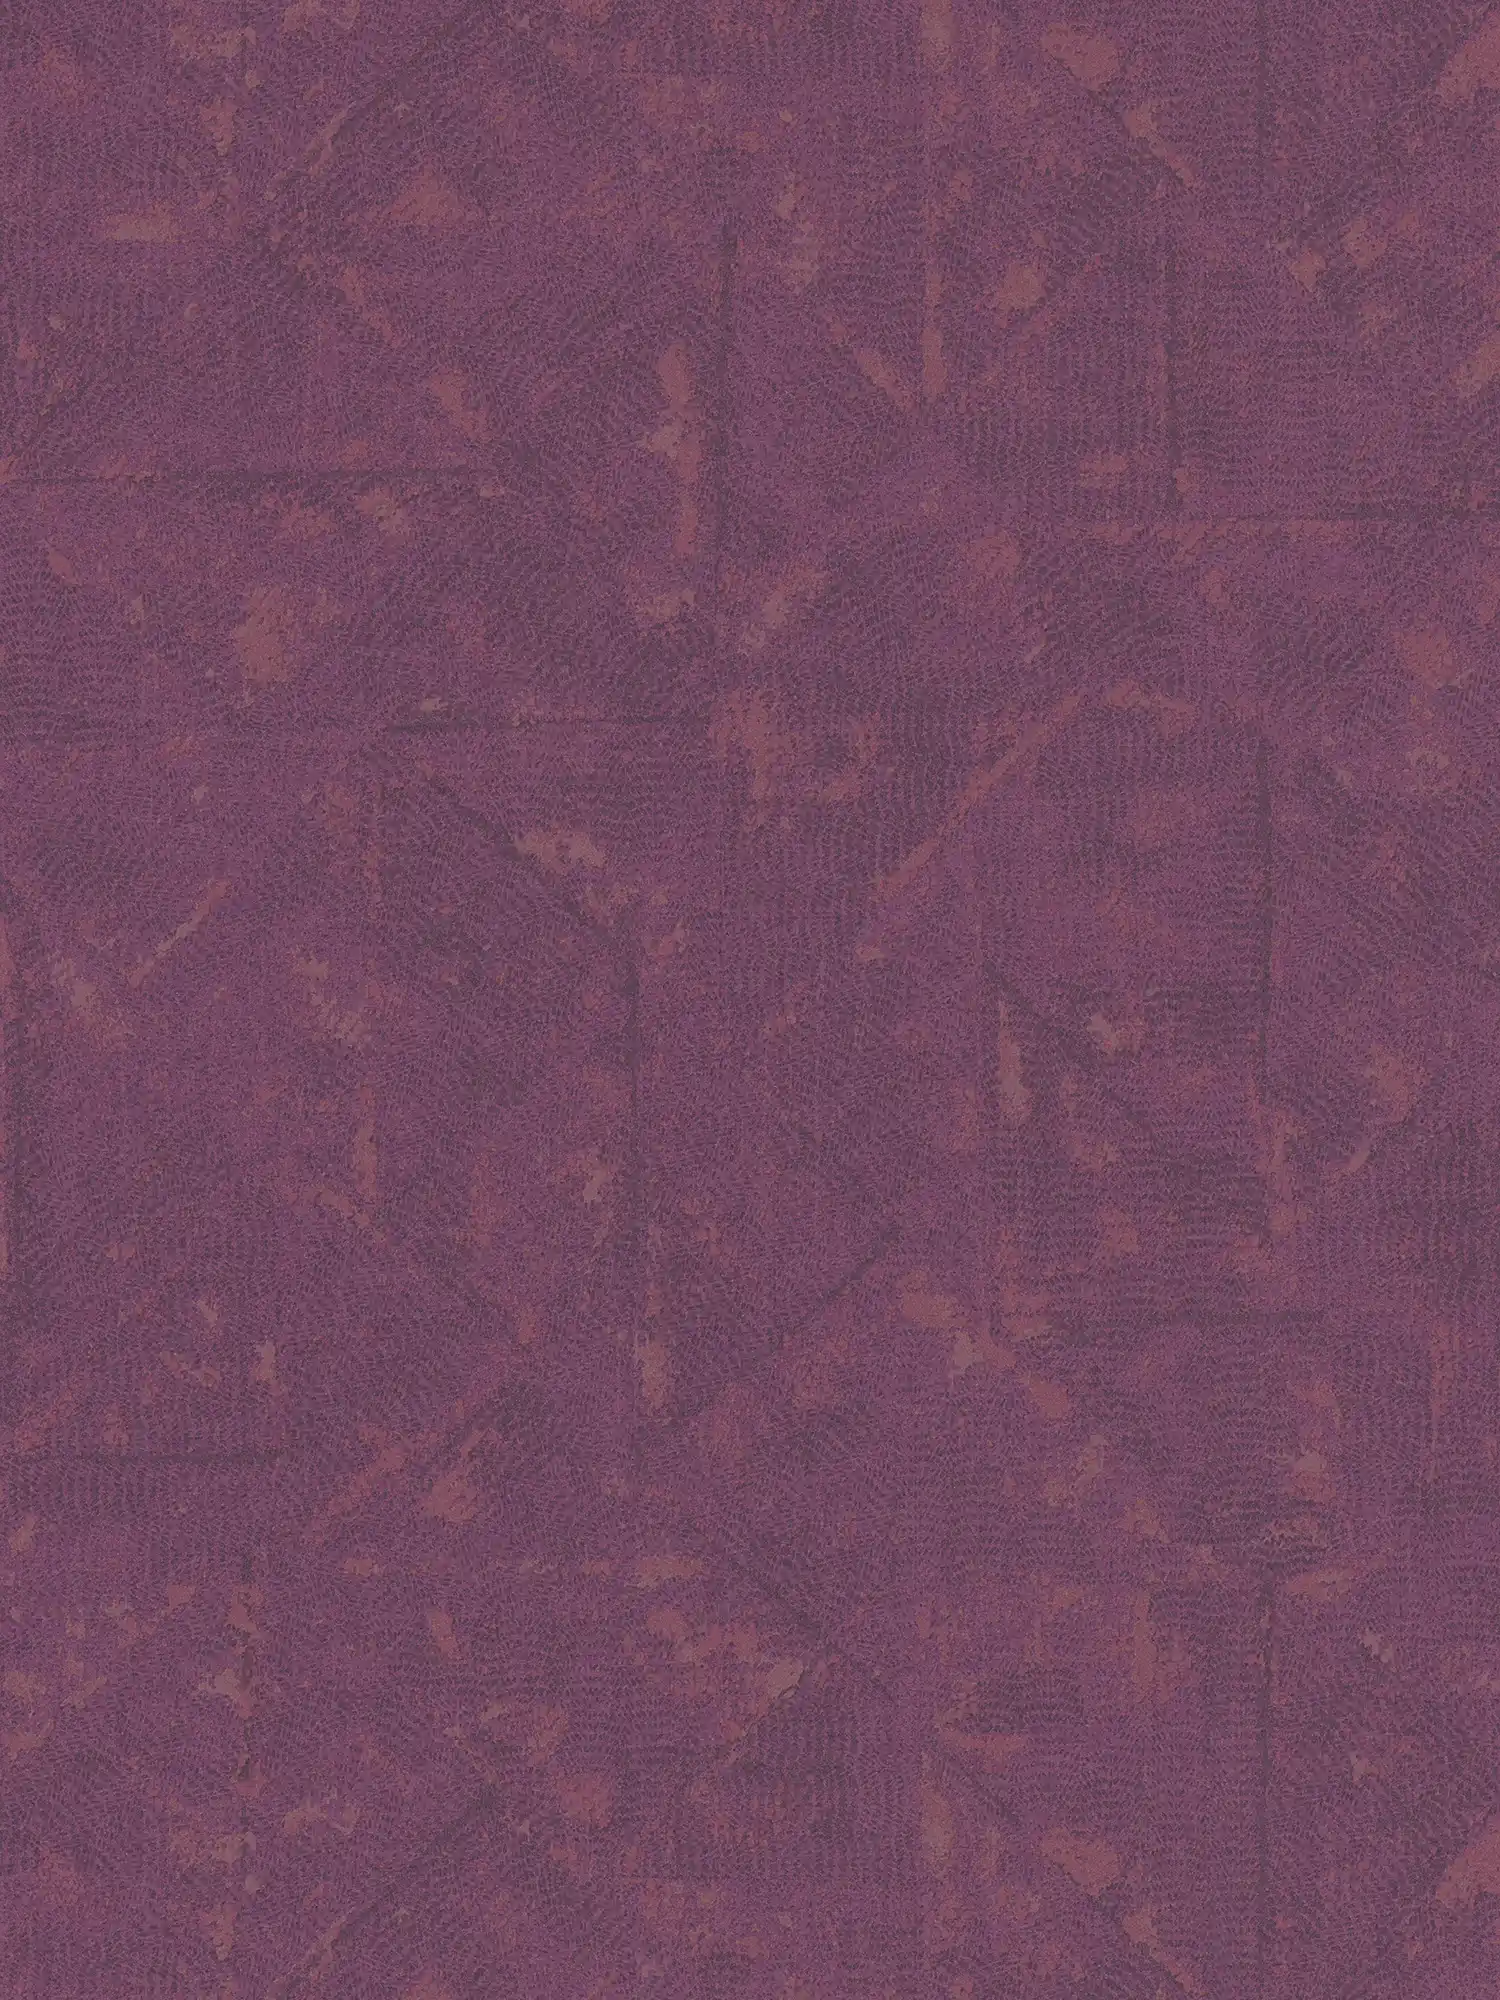 Papel pintado no tejido magenta con motivo asimétrico - violeta
